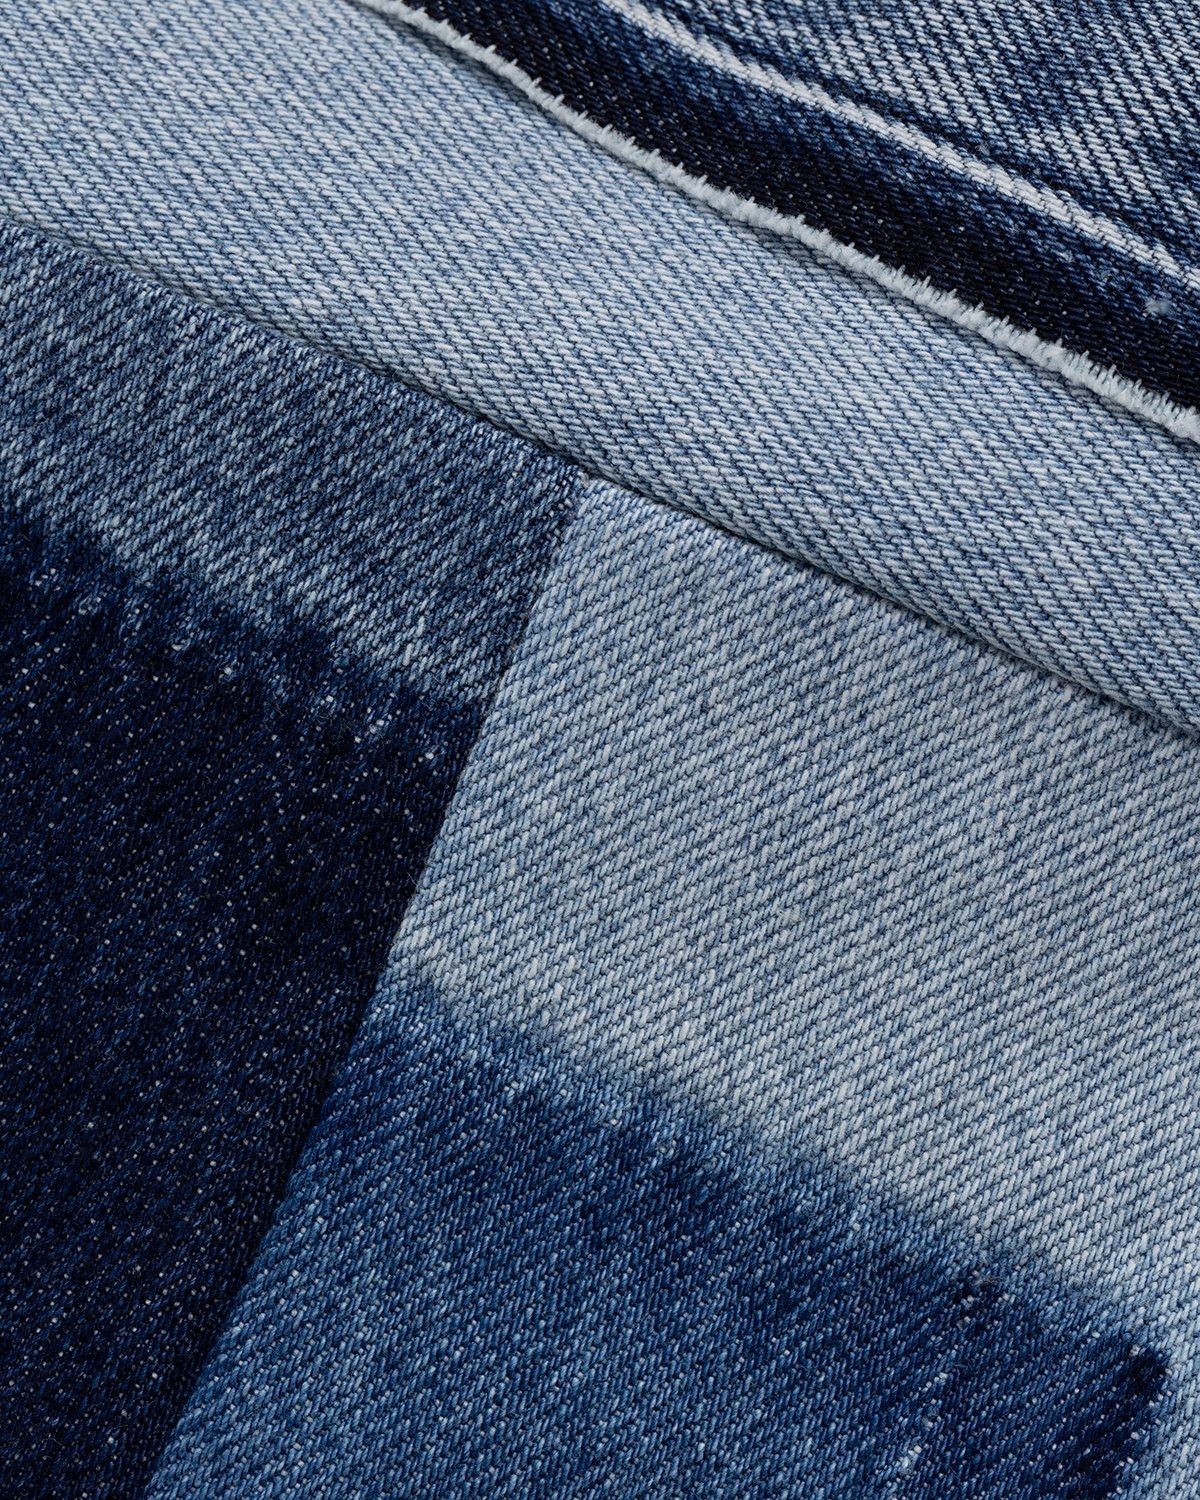 Maison Margiela – Spliced Jeans Blue - Denim - Blue - Image 8